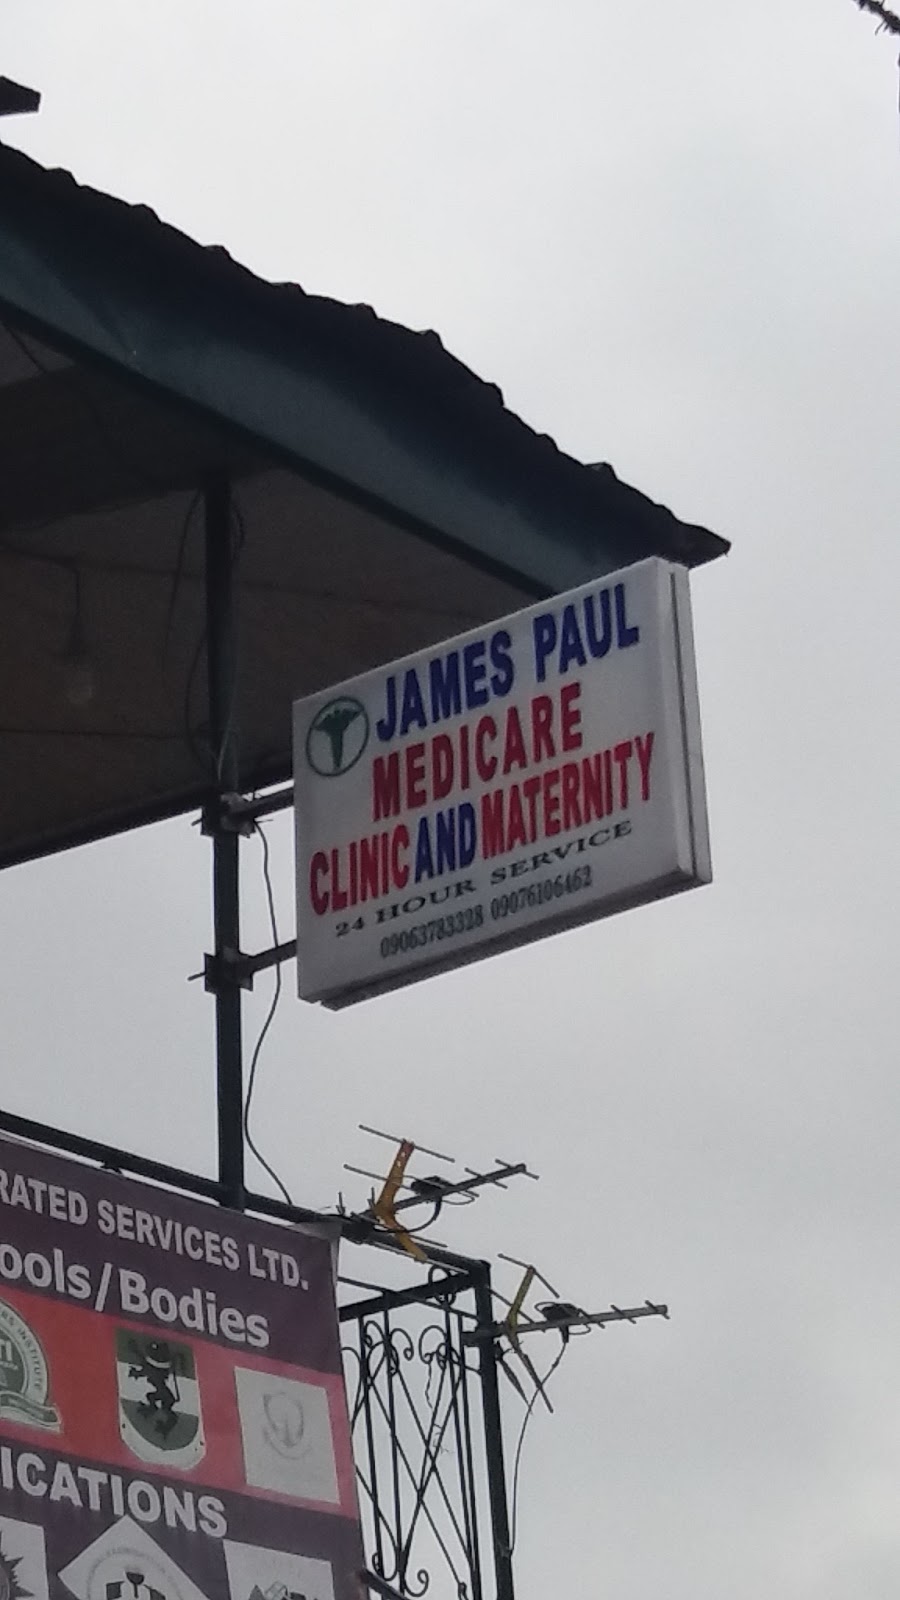 James Paul Clinic & Maternity